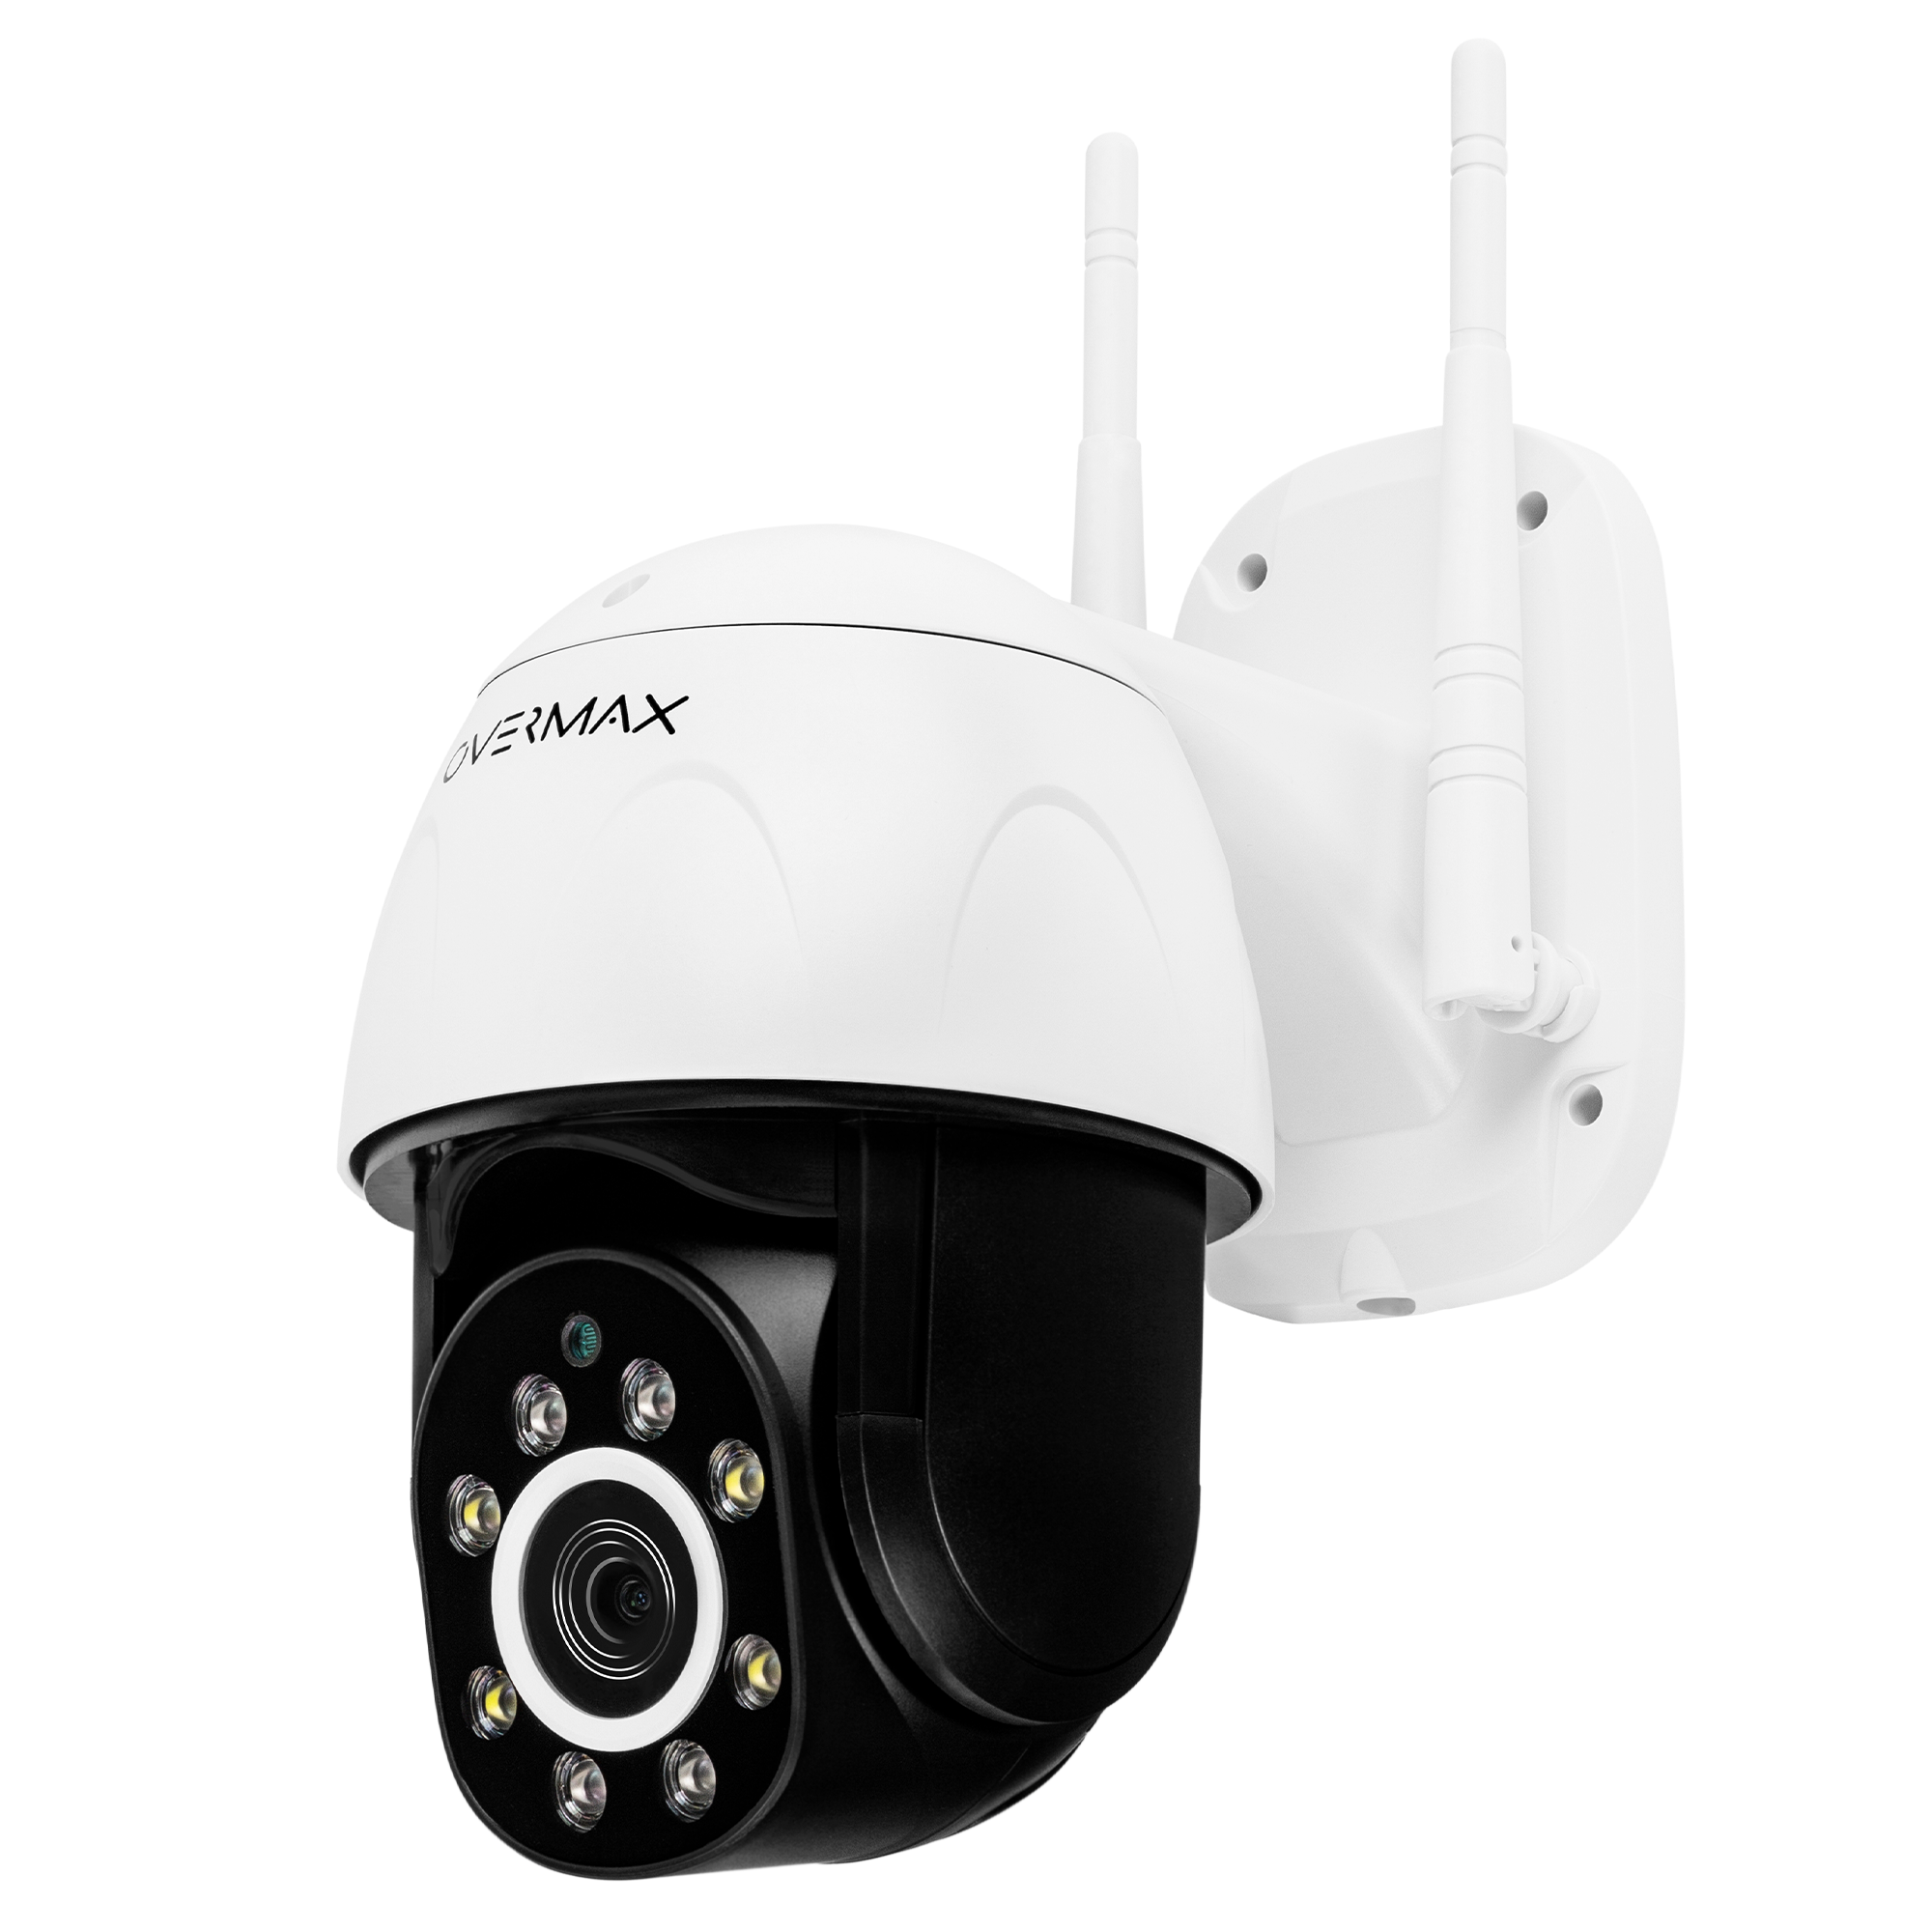 px - OVERMAX Auflösung 4.9 Camspot Überwachungskamera, Pro, x 2.5K 1288 2288 Video: